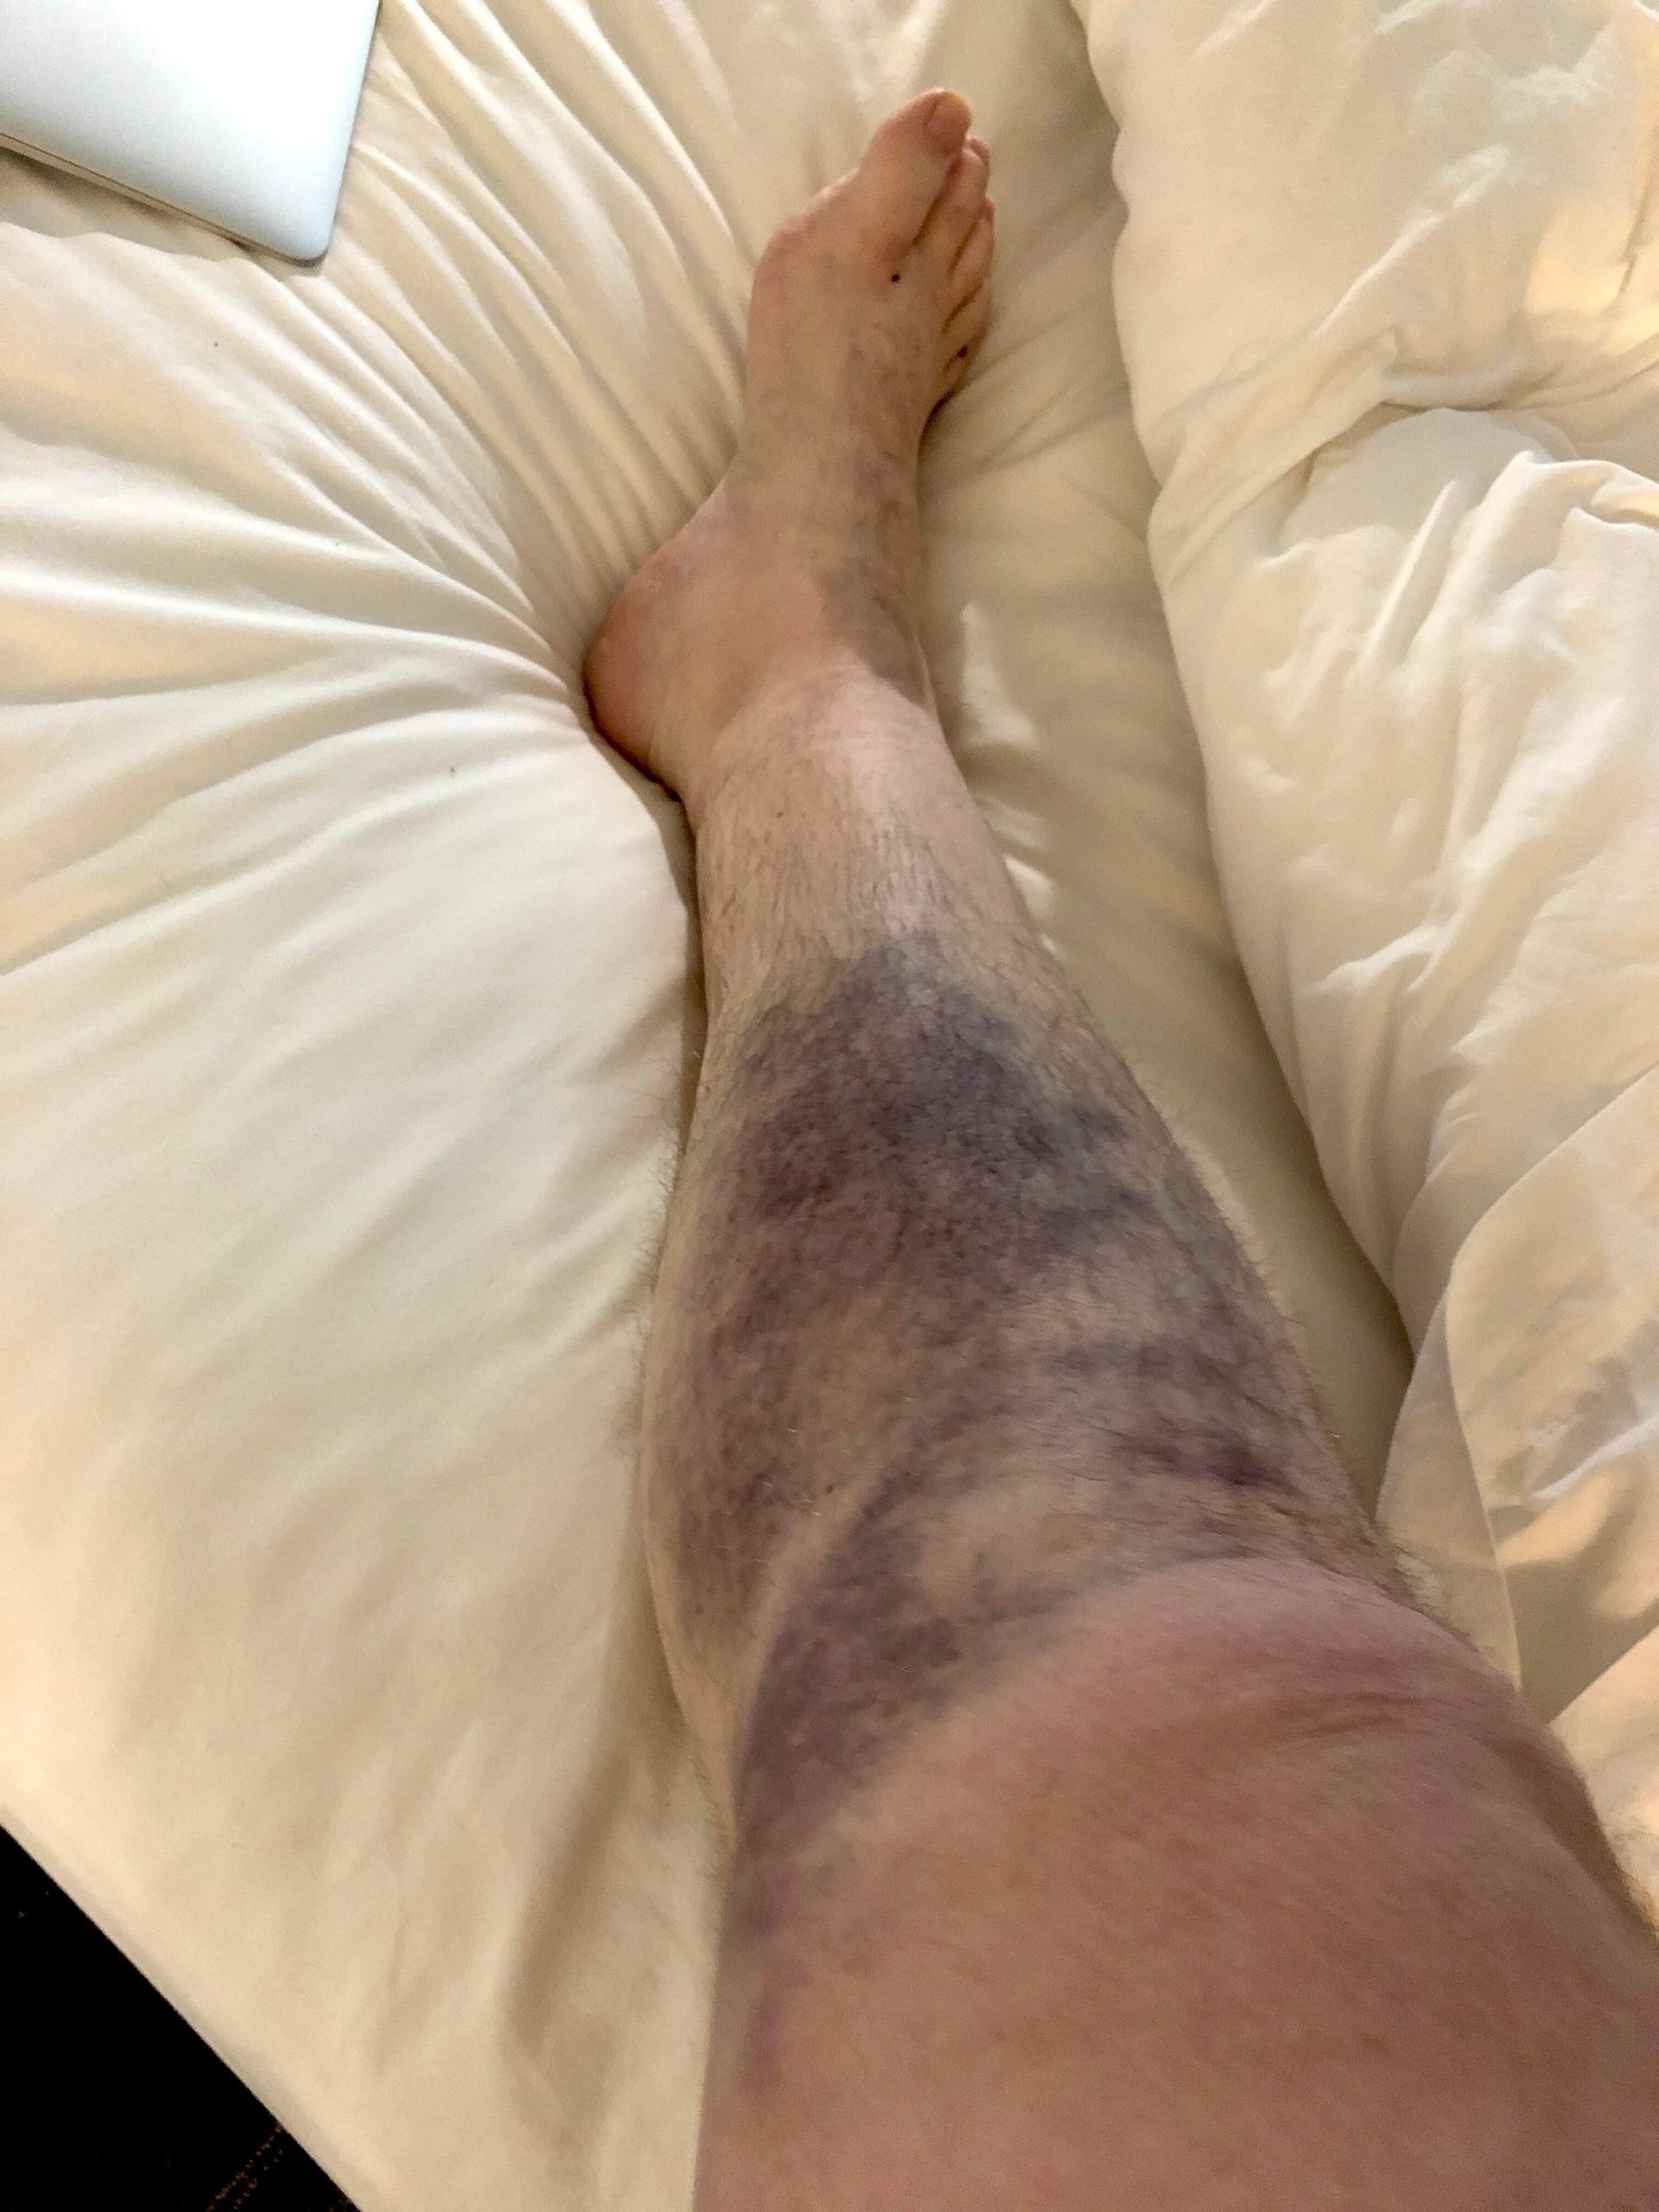 ultra-bruise